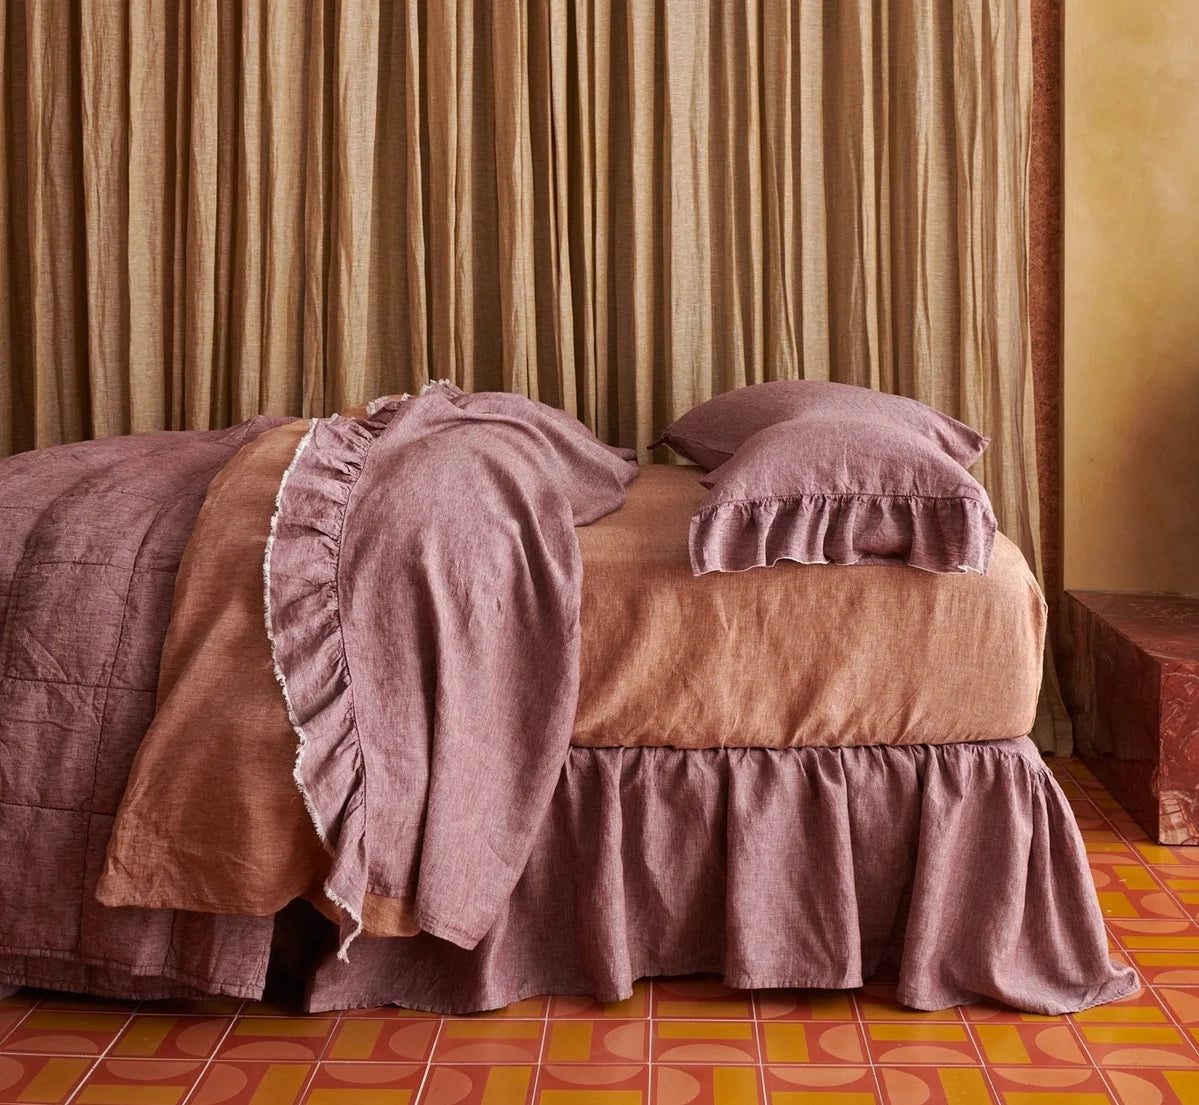 SOW aubergine marl linen pillowcase set with ruffle